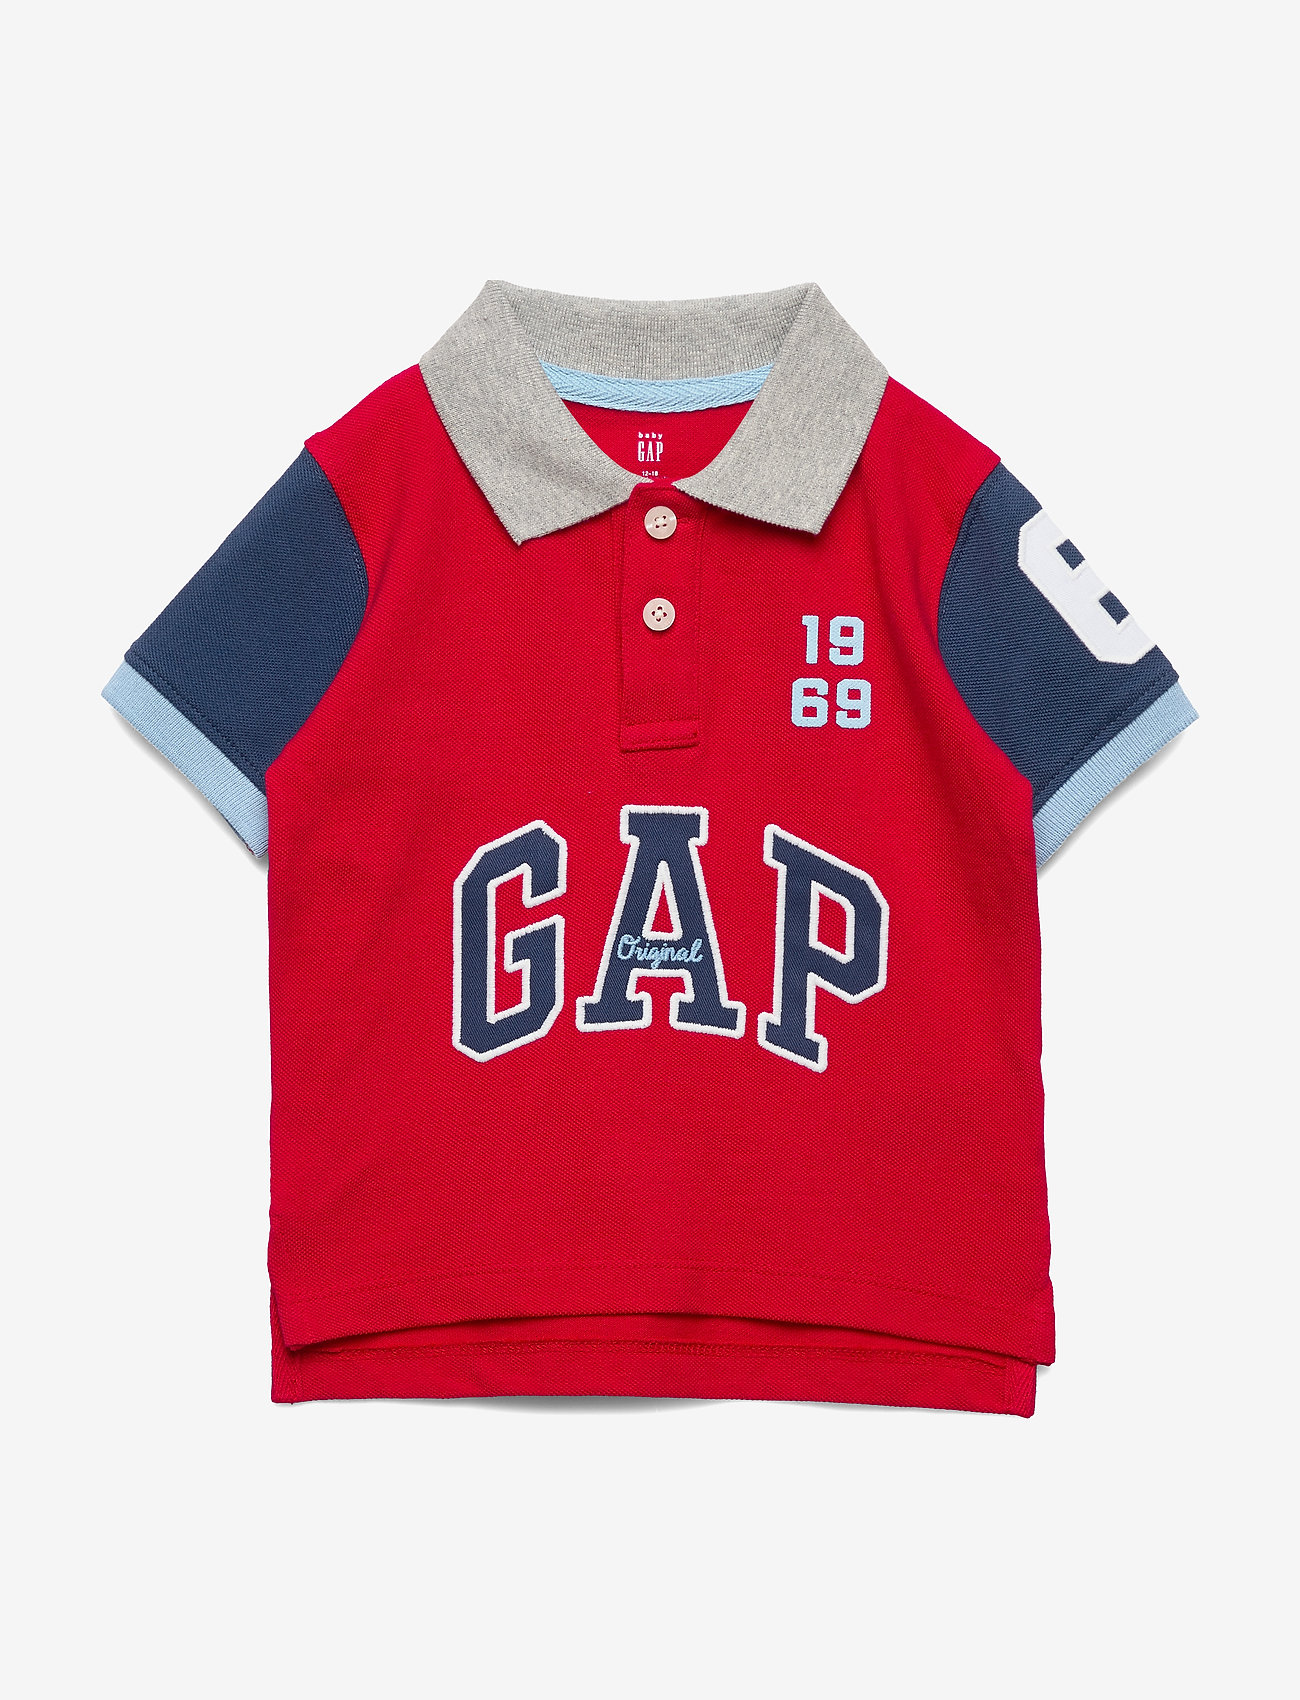 gap brand shirts